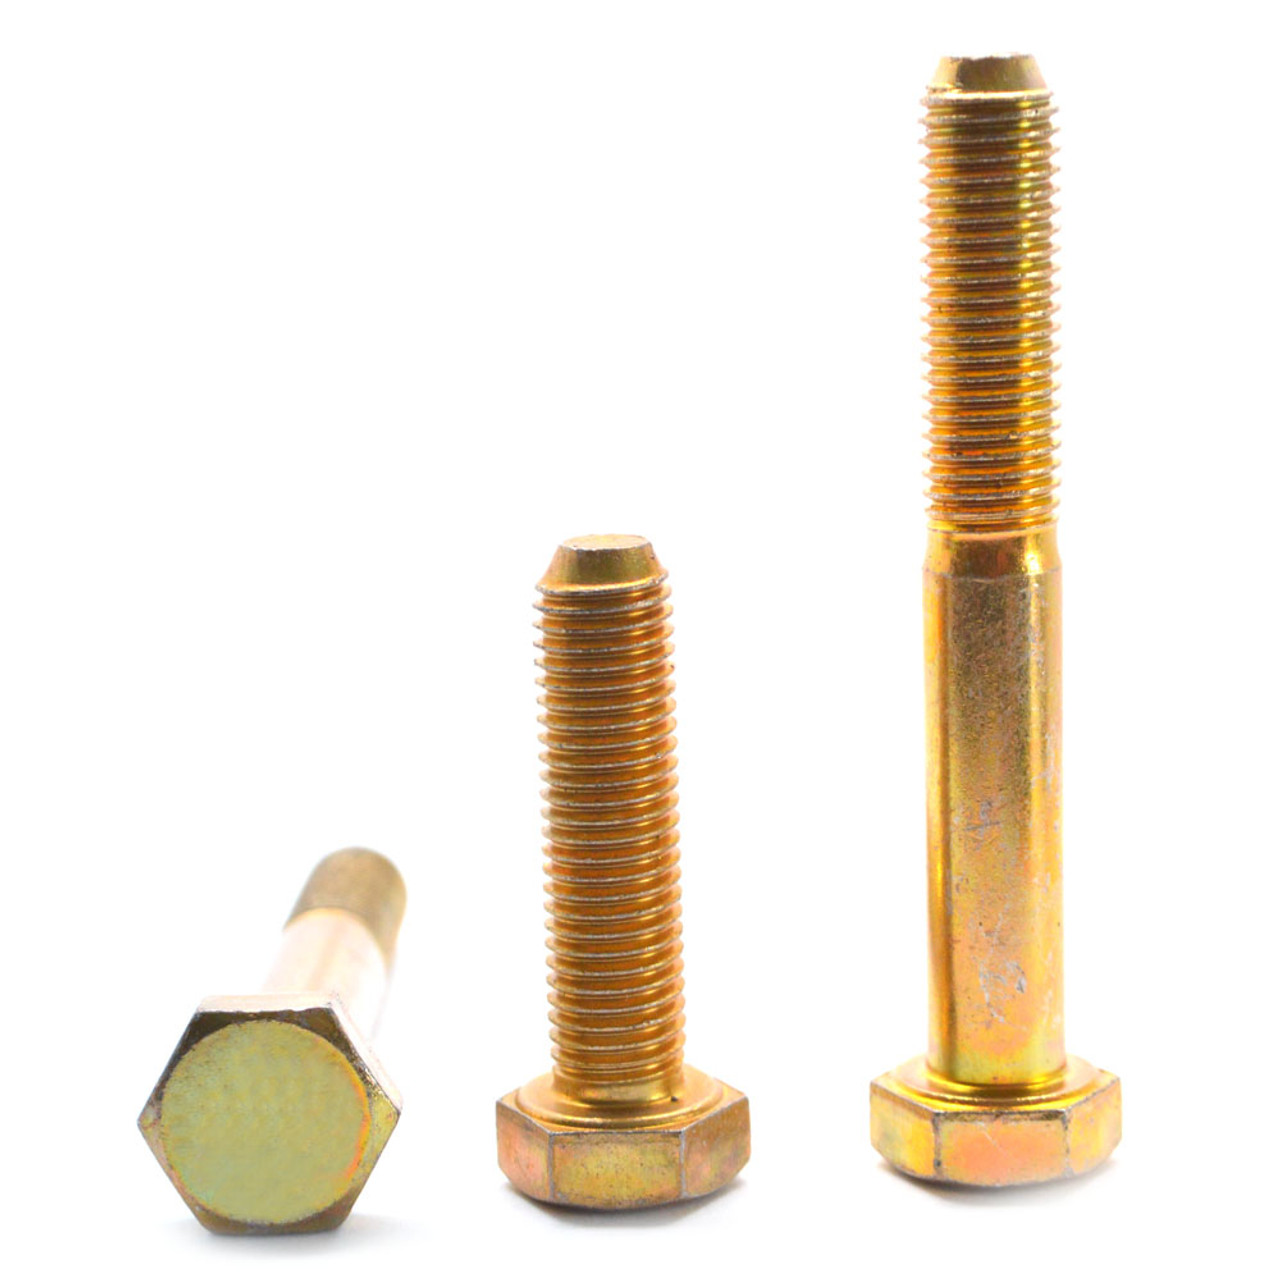 M10 x 1.50 x 120 MM Coarse Thread DIN 931 Class 8.8 Hex Cap Screw (Bolt) Medium Carbon Steel Yellow Zinc Plated